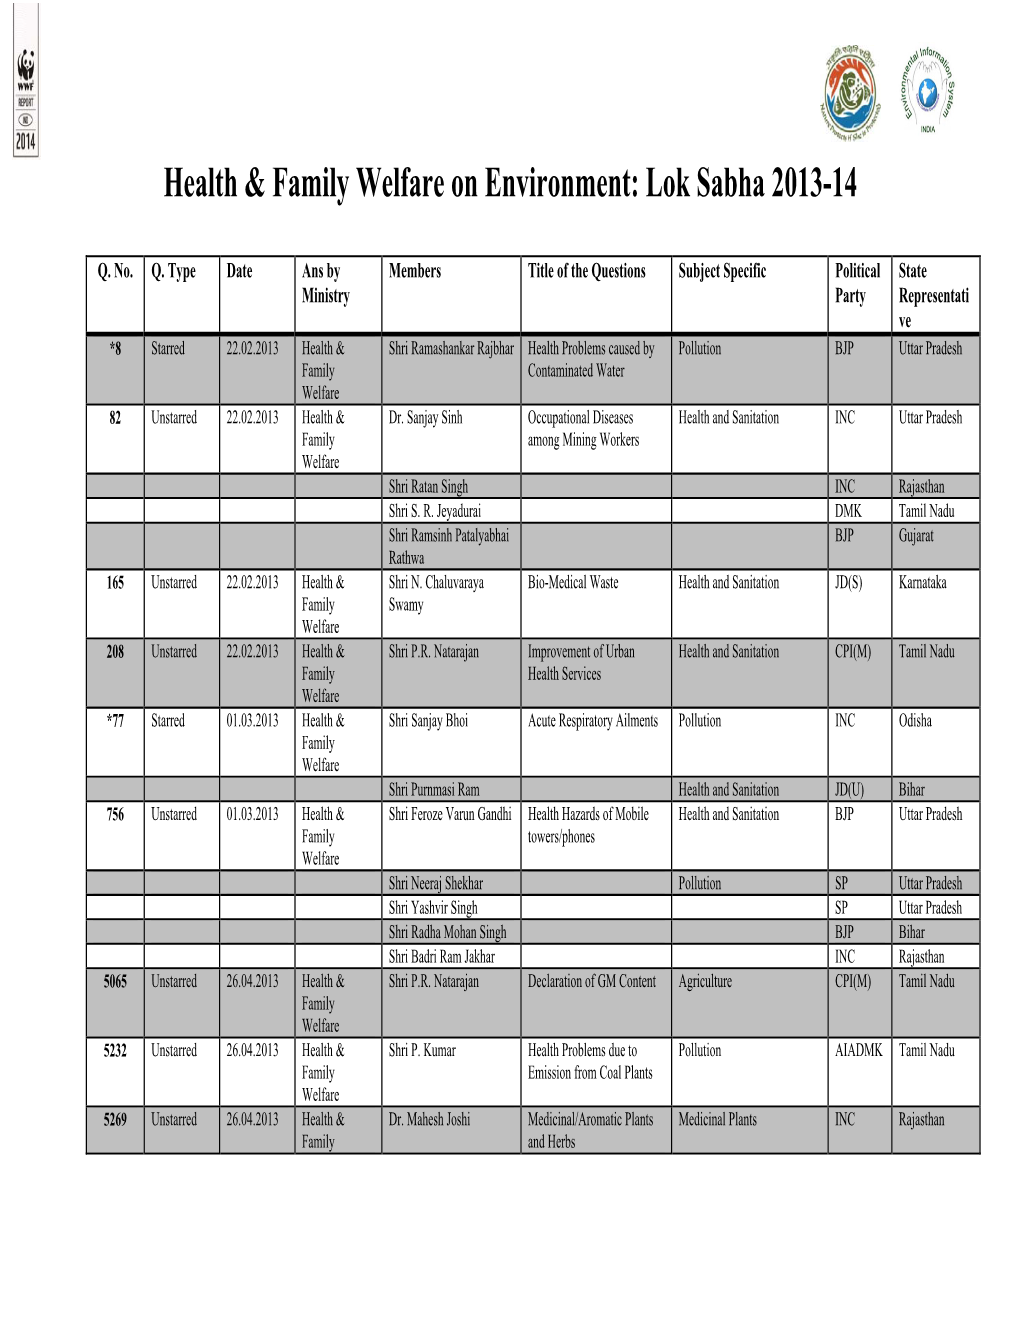 Health & Family Welfare on Environment: Lok Sabha 2013-14